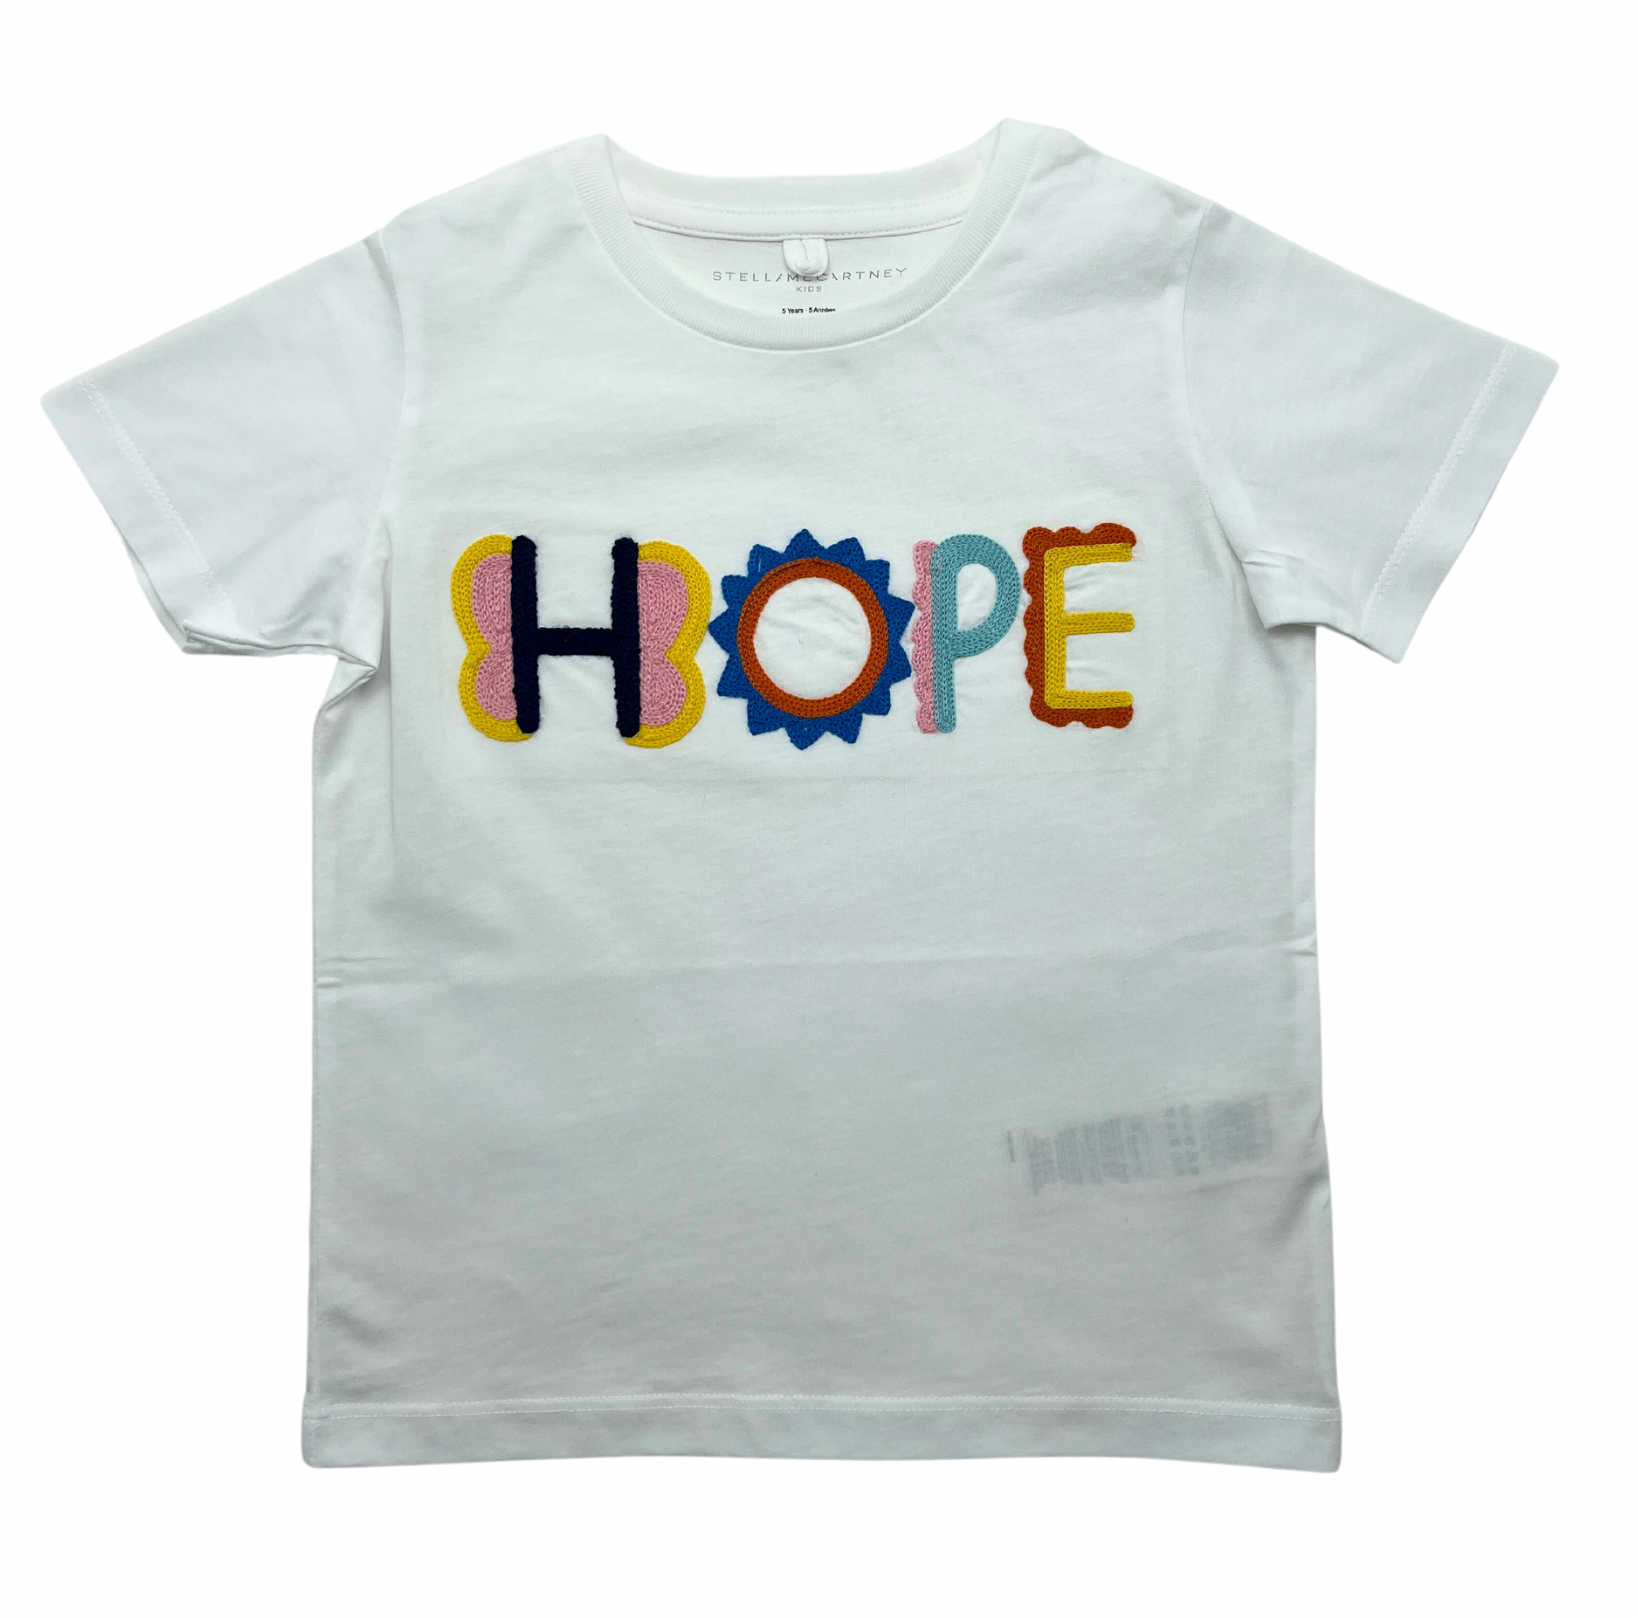 STELLA MCCARTNEY - Hope t-shirt - 5 years old